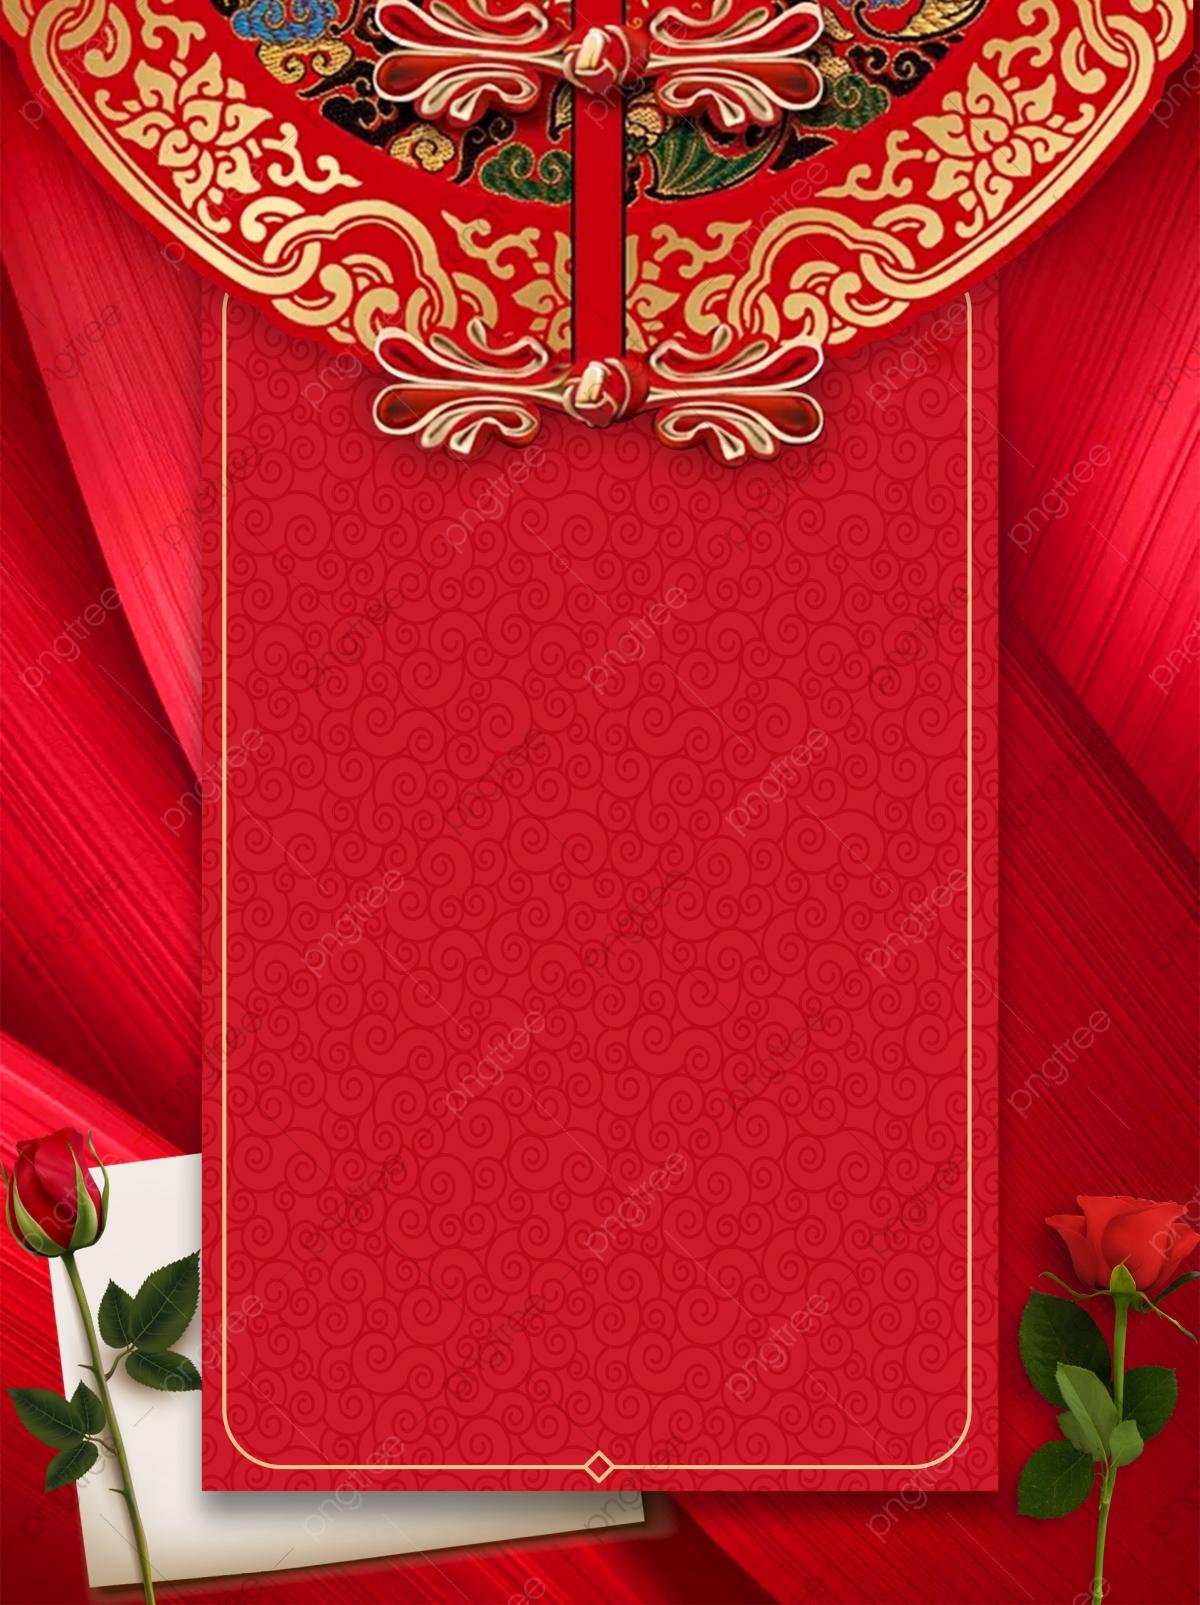 wedding-invitation-cdr-templates-free-download-best-design-idea